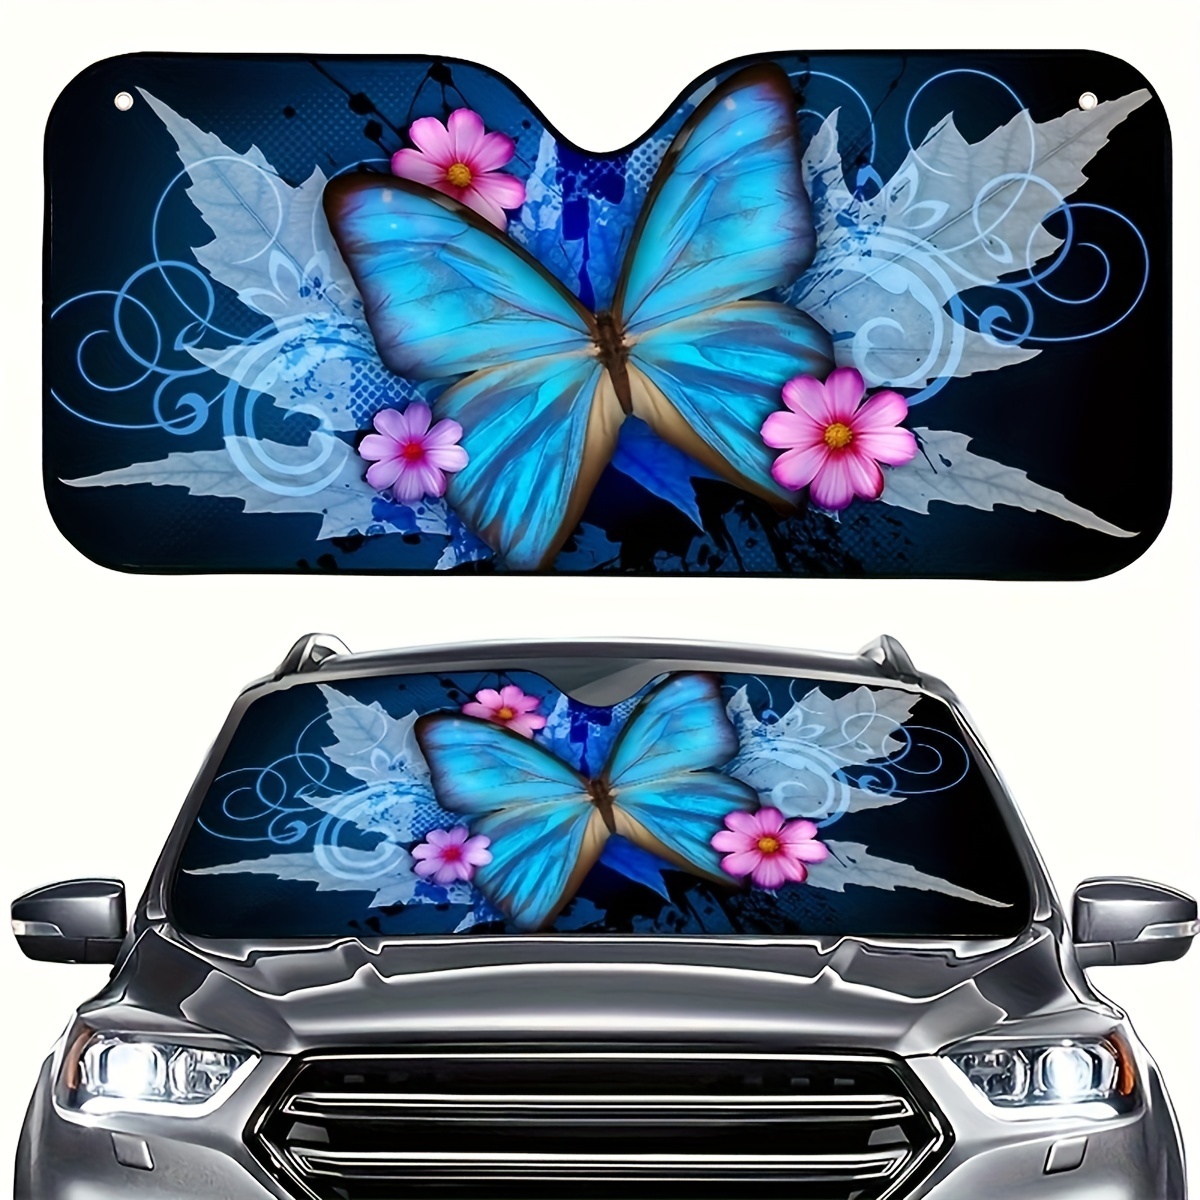 

1pc Blue Butterfly Car Sun Shade For Windshield Blocks Uv Rays Visor Protector Foldable Sun Shield Keeps Cool